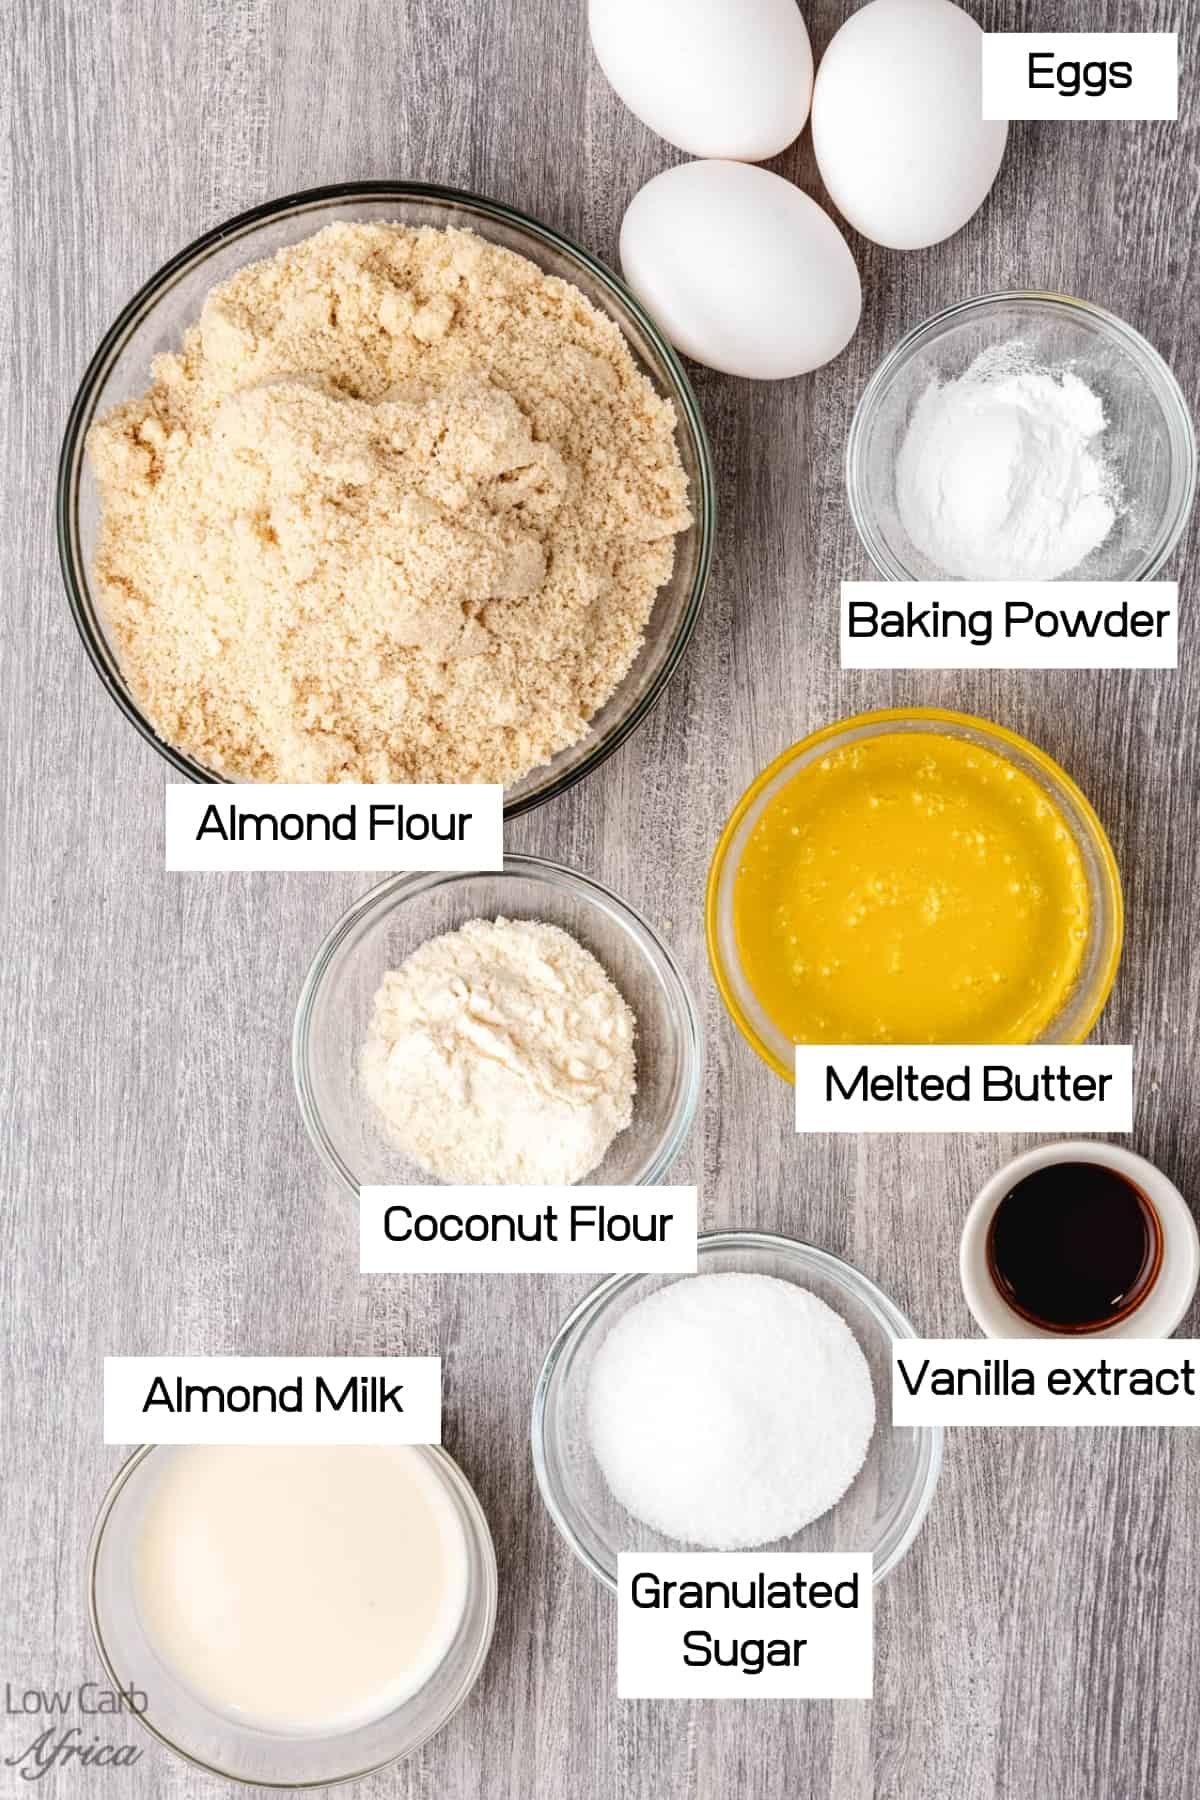 Almond Milk, coconut flour and Vanilla Extract